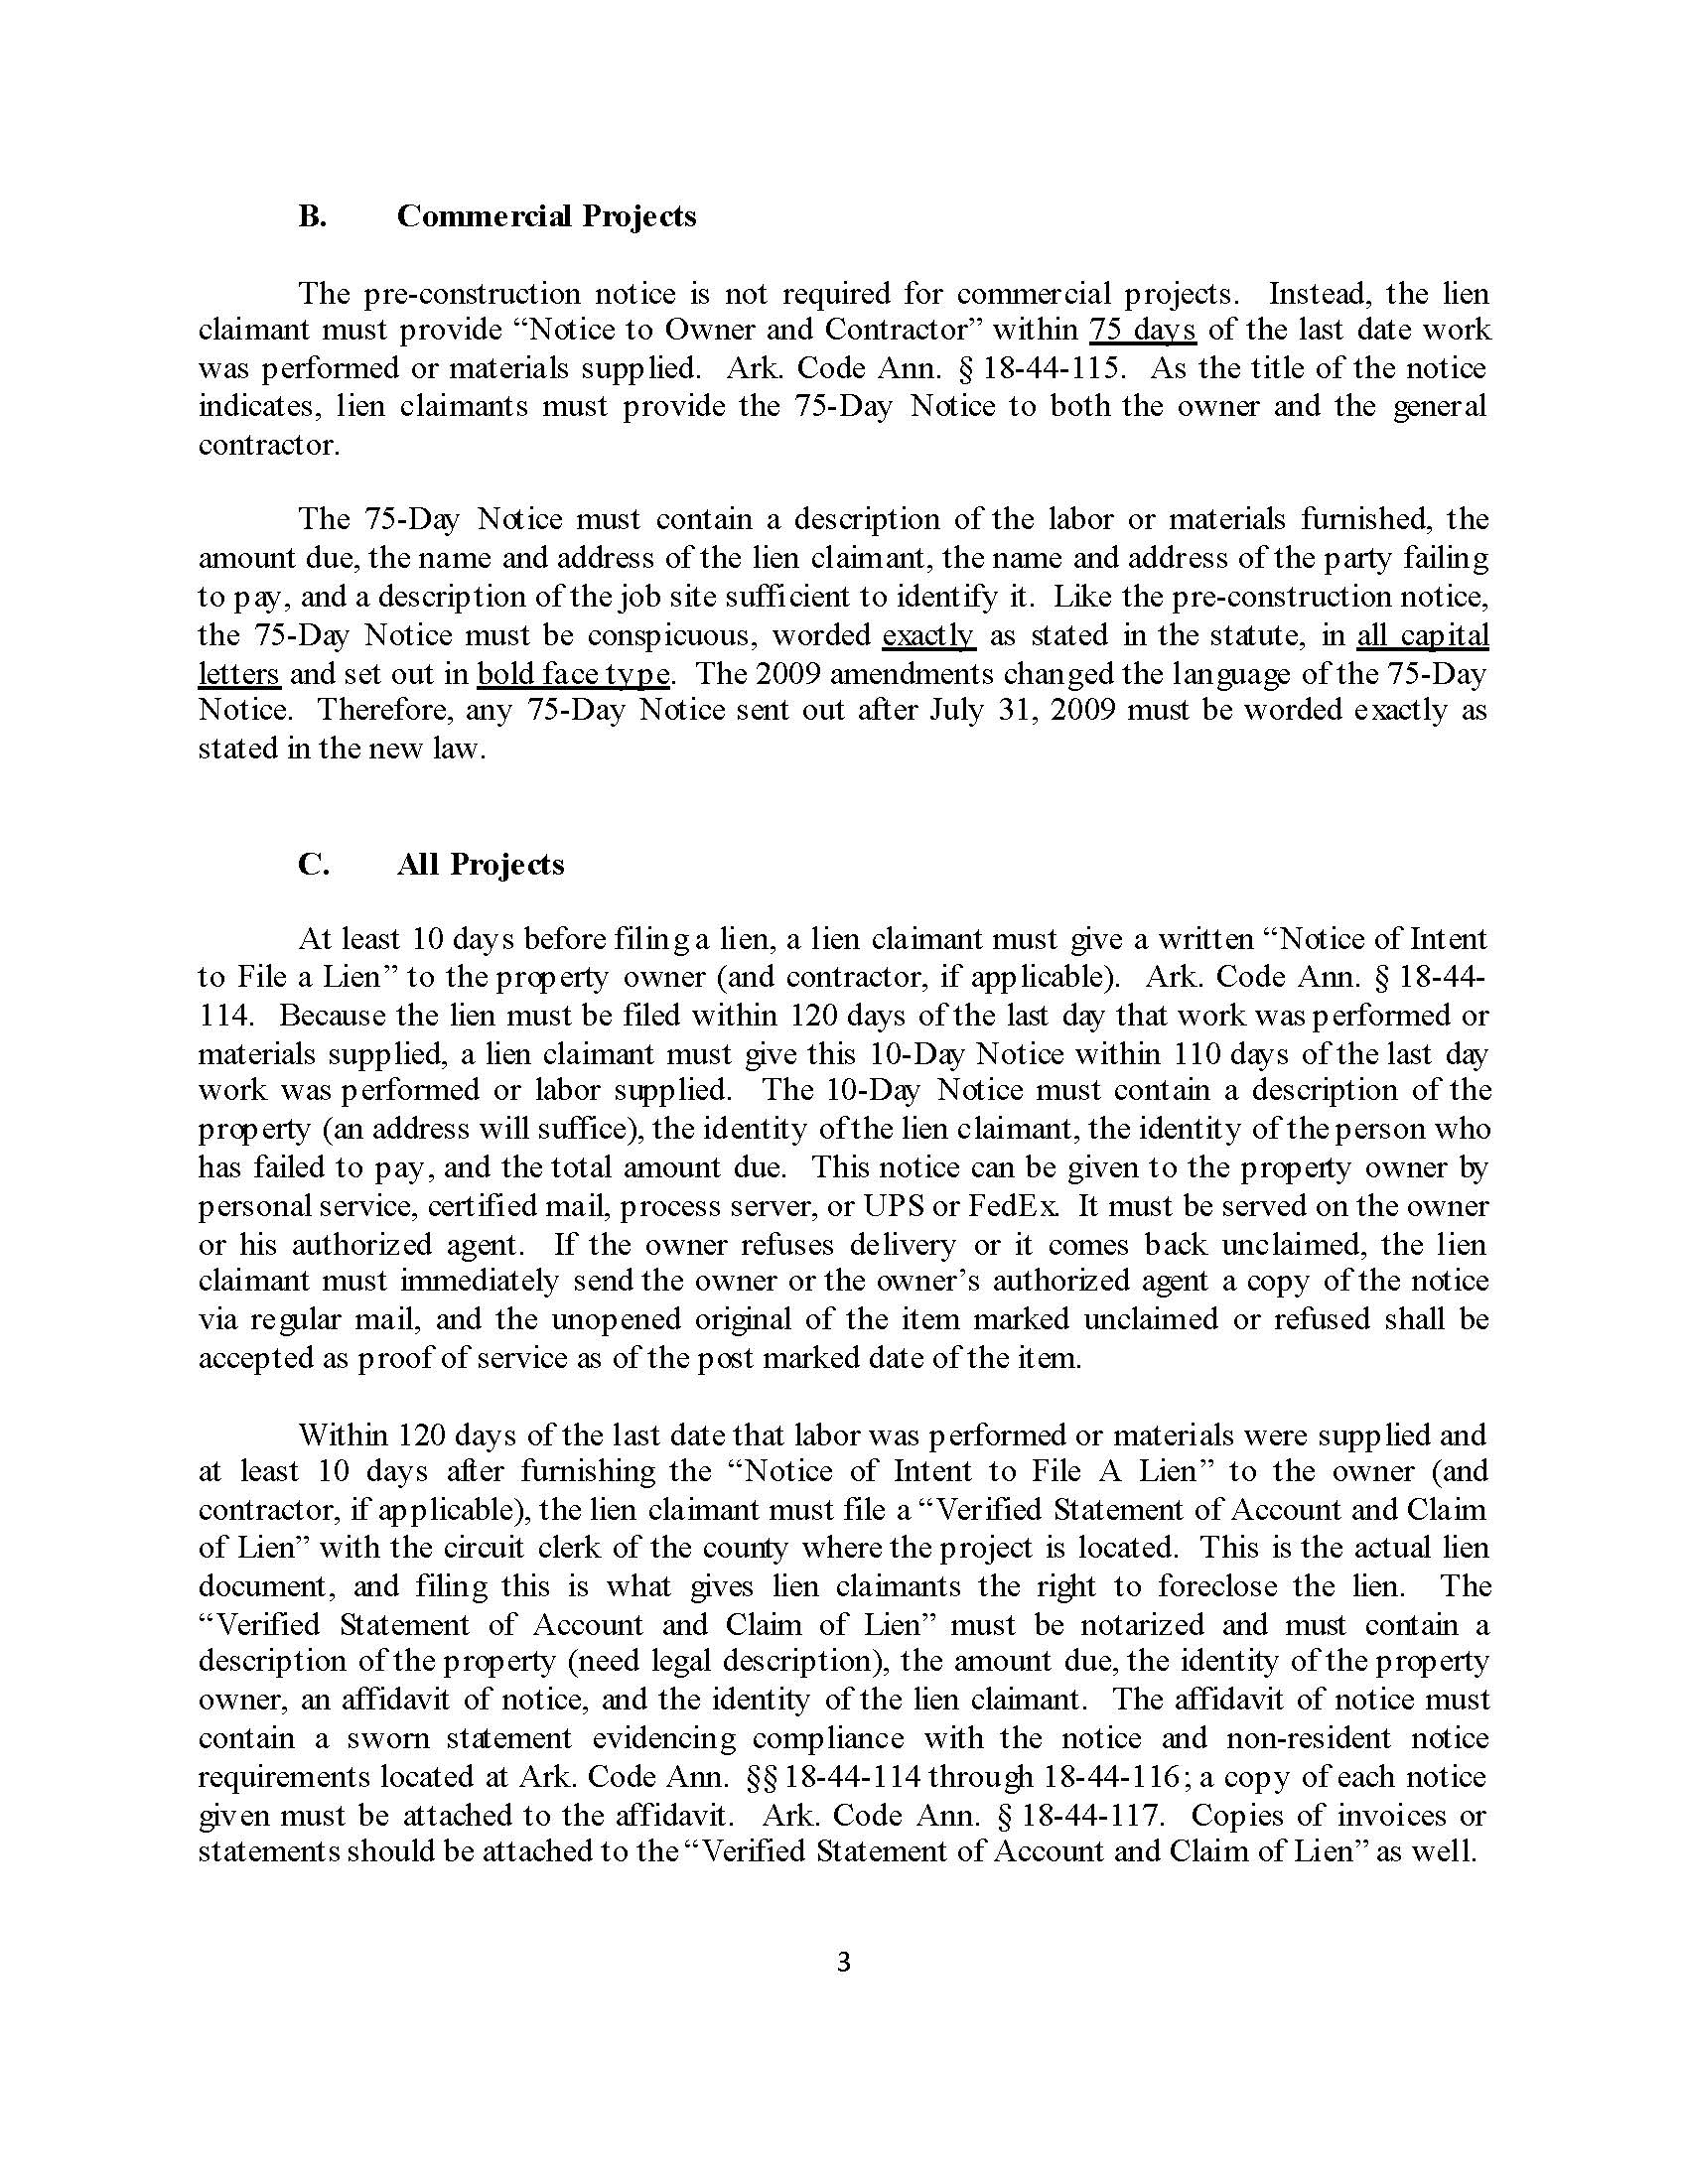 Summary-Materialman-Lien-Statutes-and-Amendments-faulkner-2011_Page_3.jpg